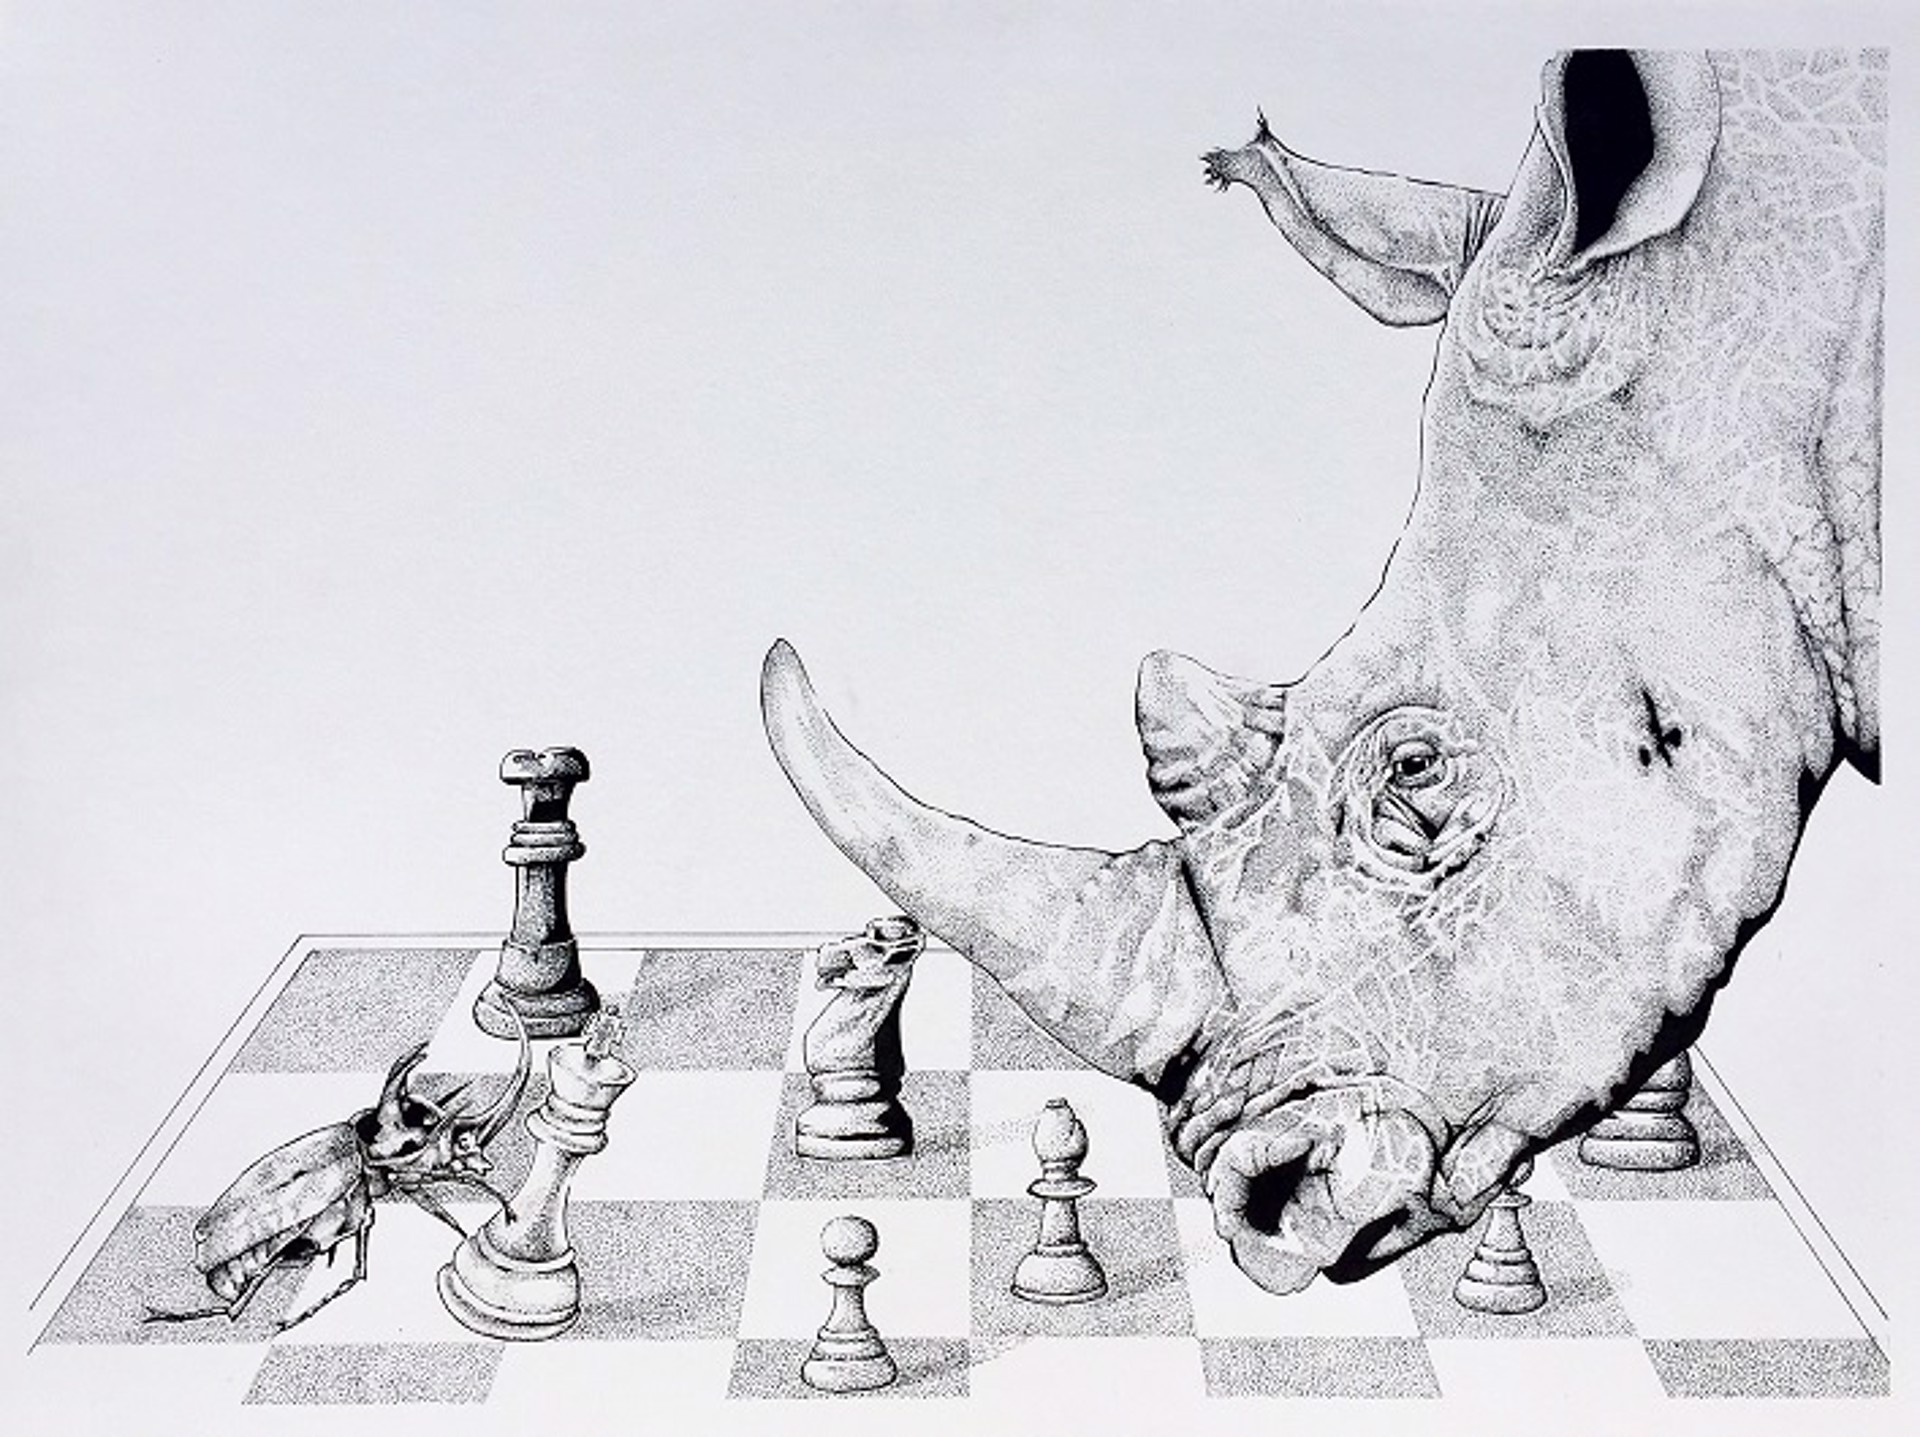 Your Move Wildlife by Daniel Ryan